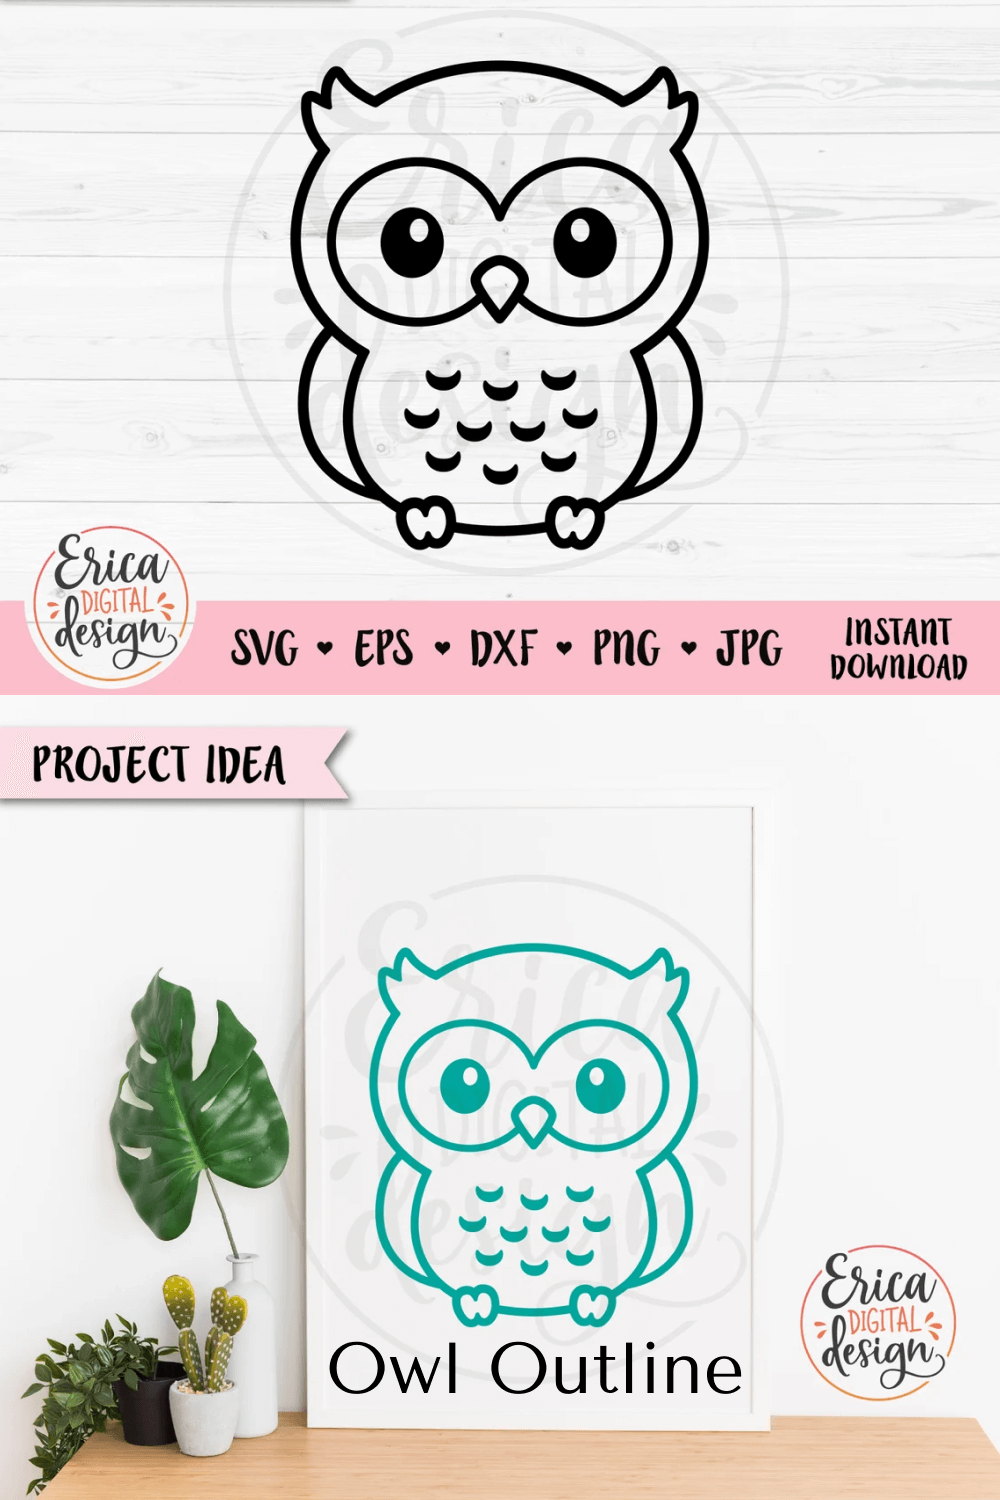 Owl outline svg cute owl.